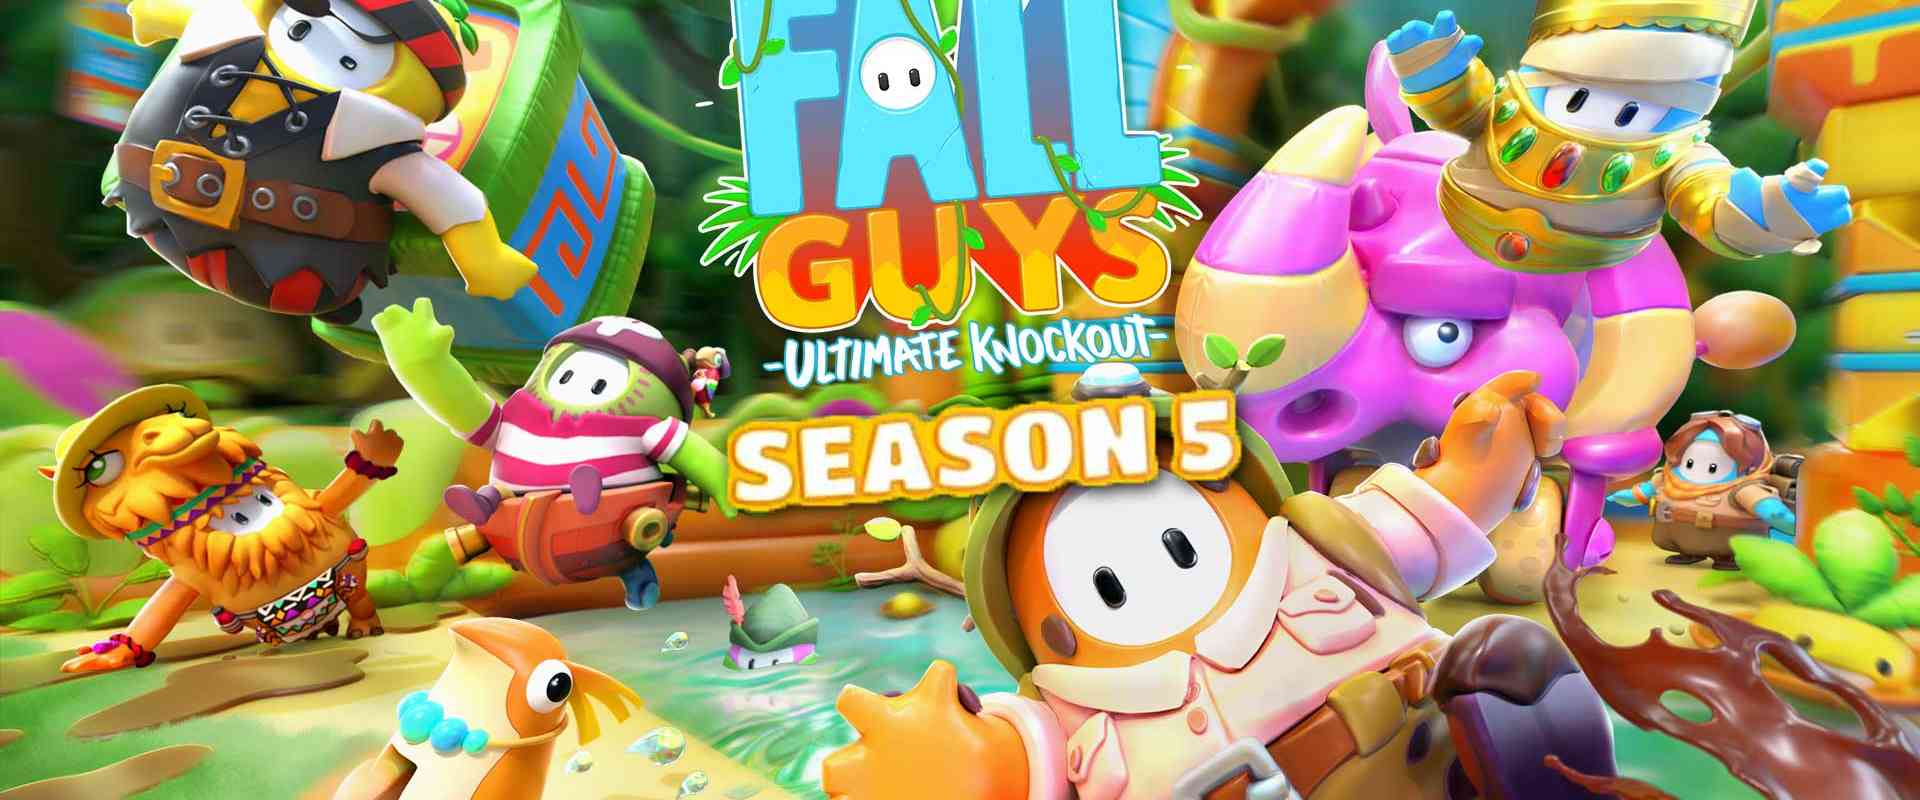 fall guys season 5 release cover